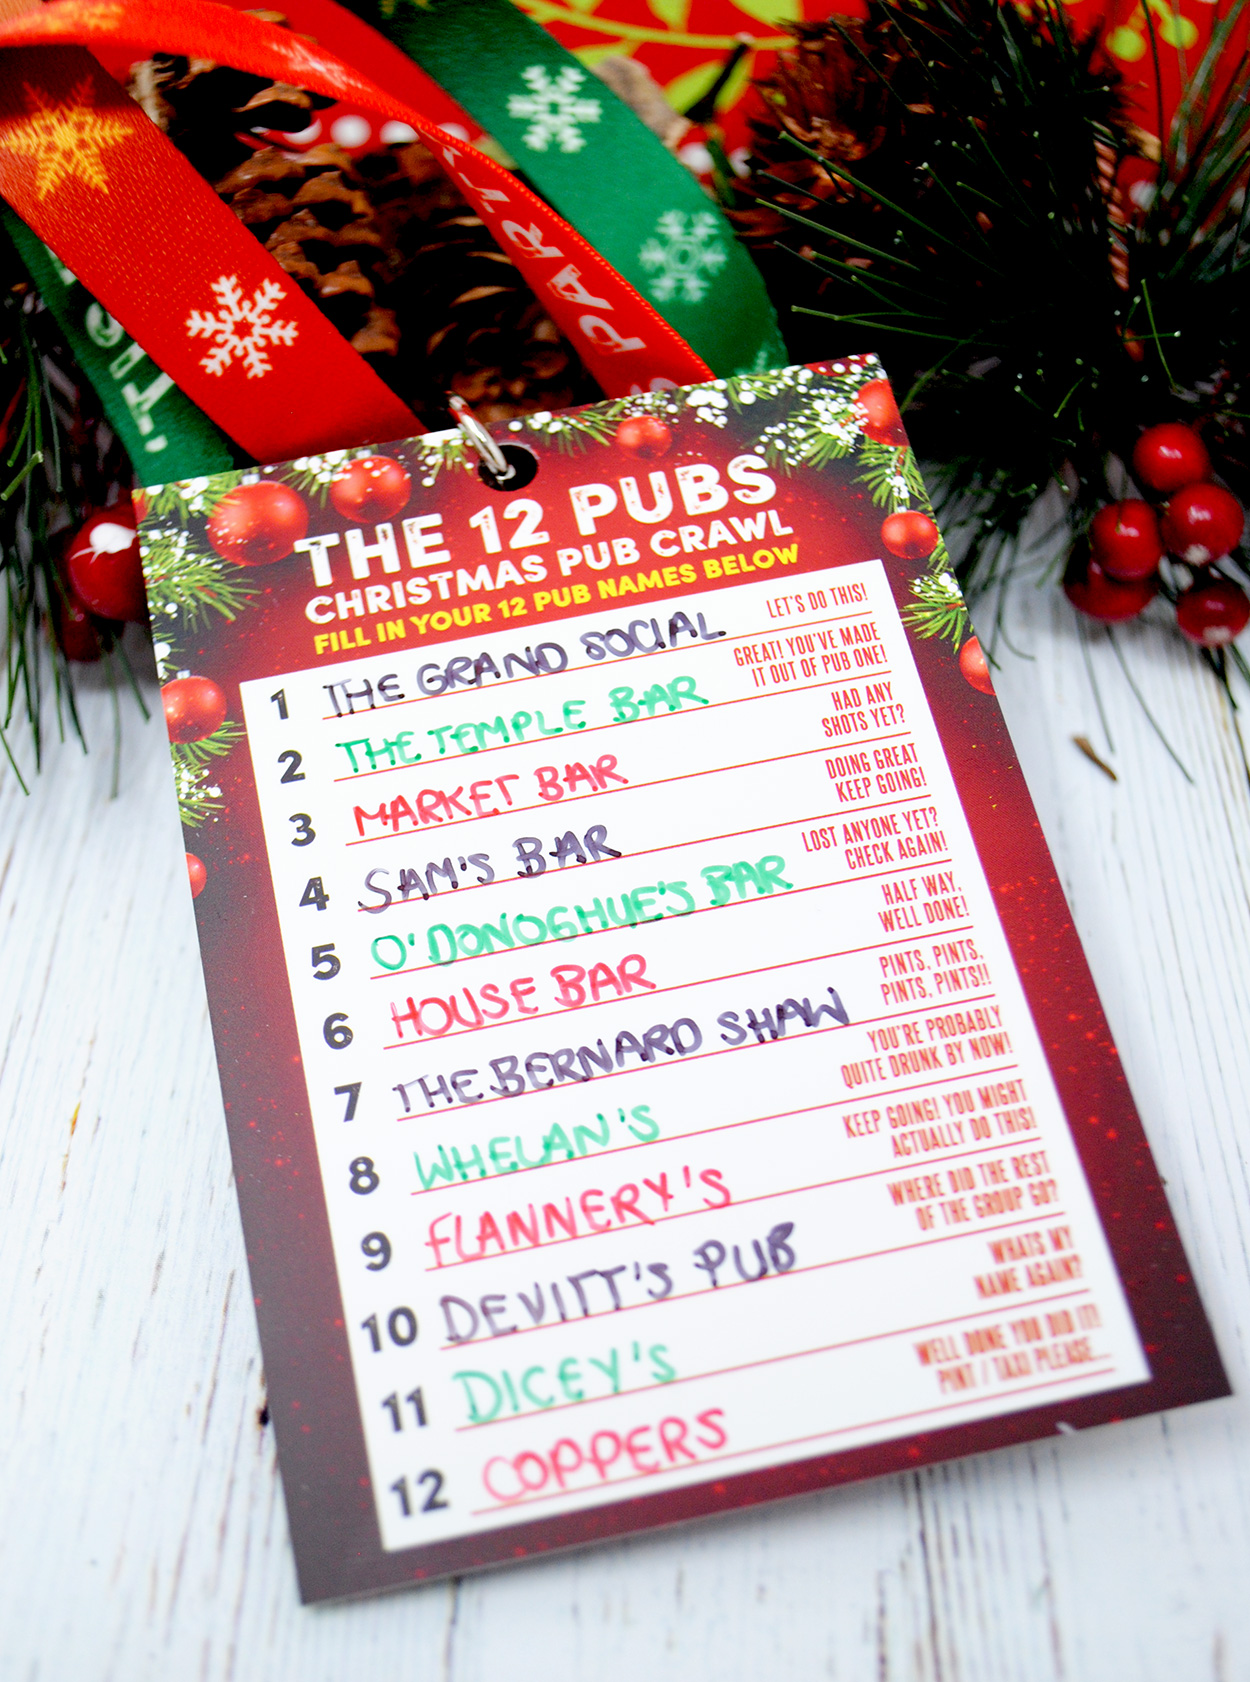 dublin 12 pubs christmas pub crawl guide